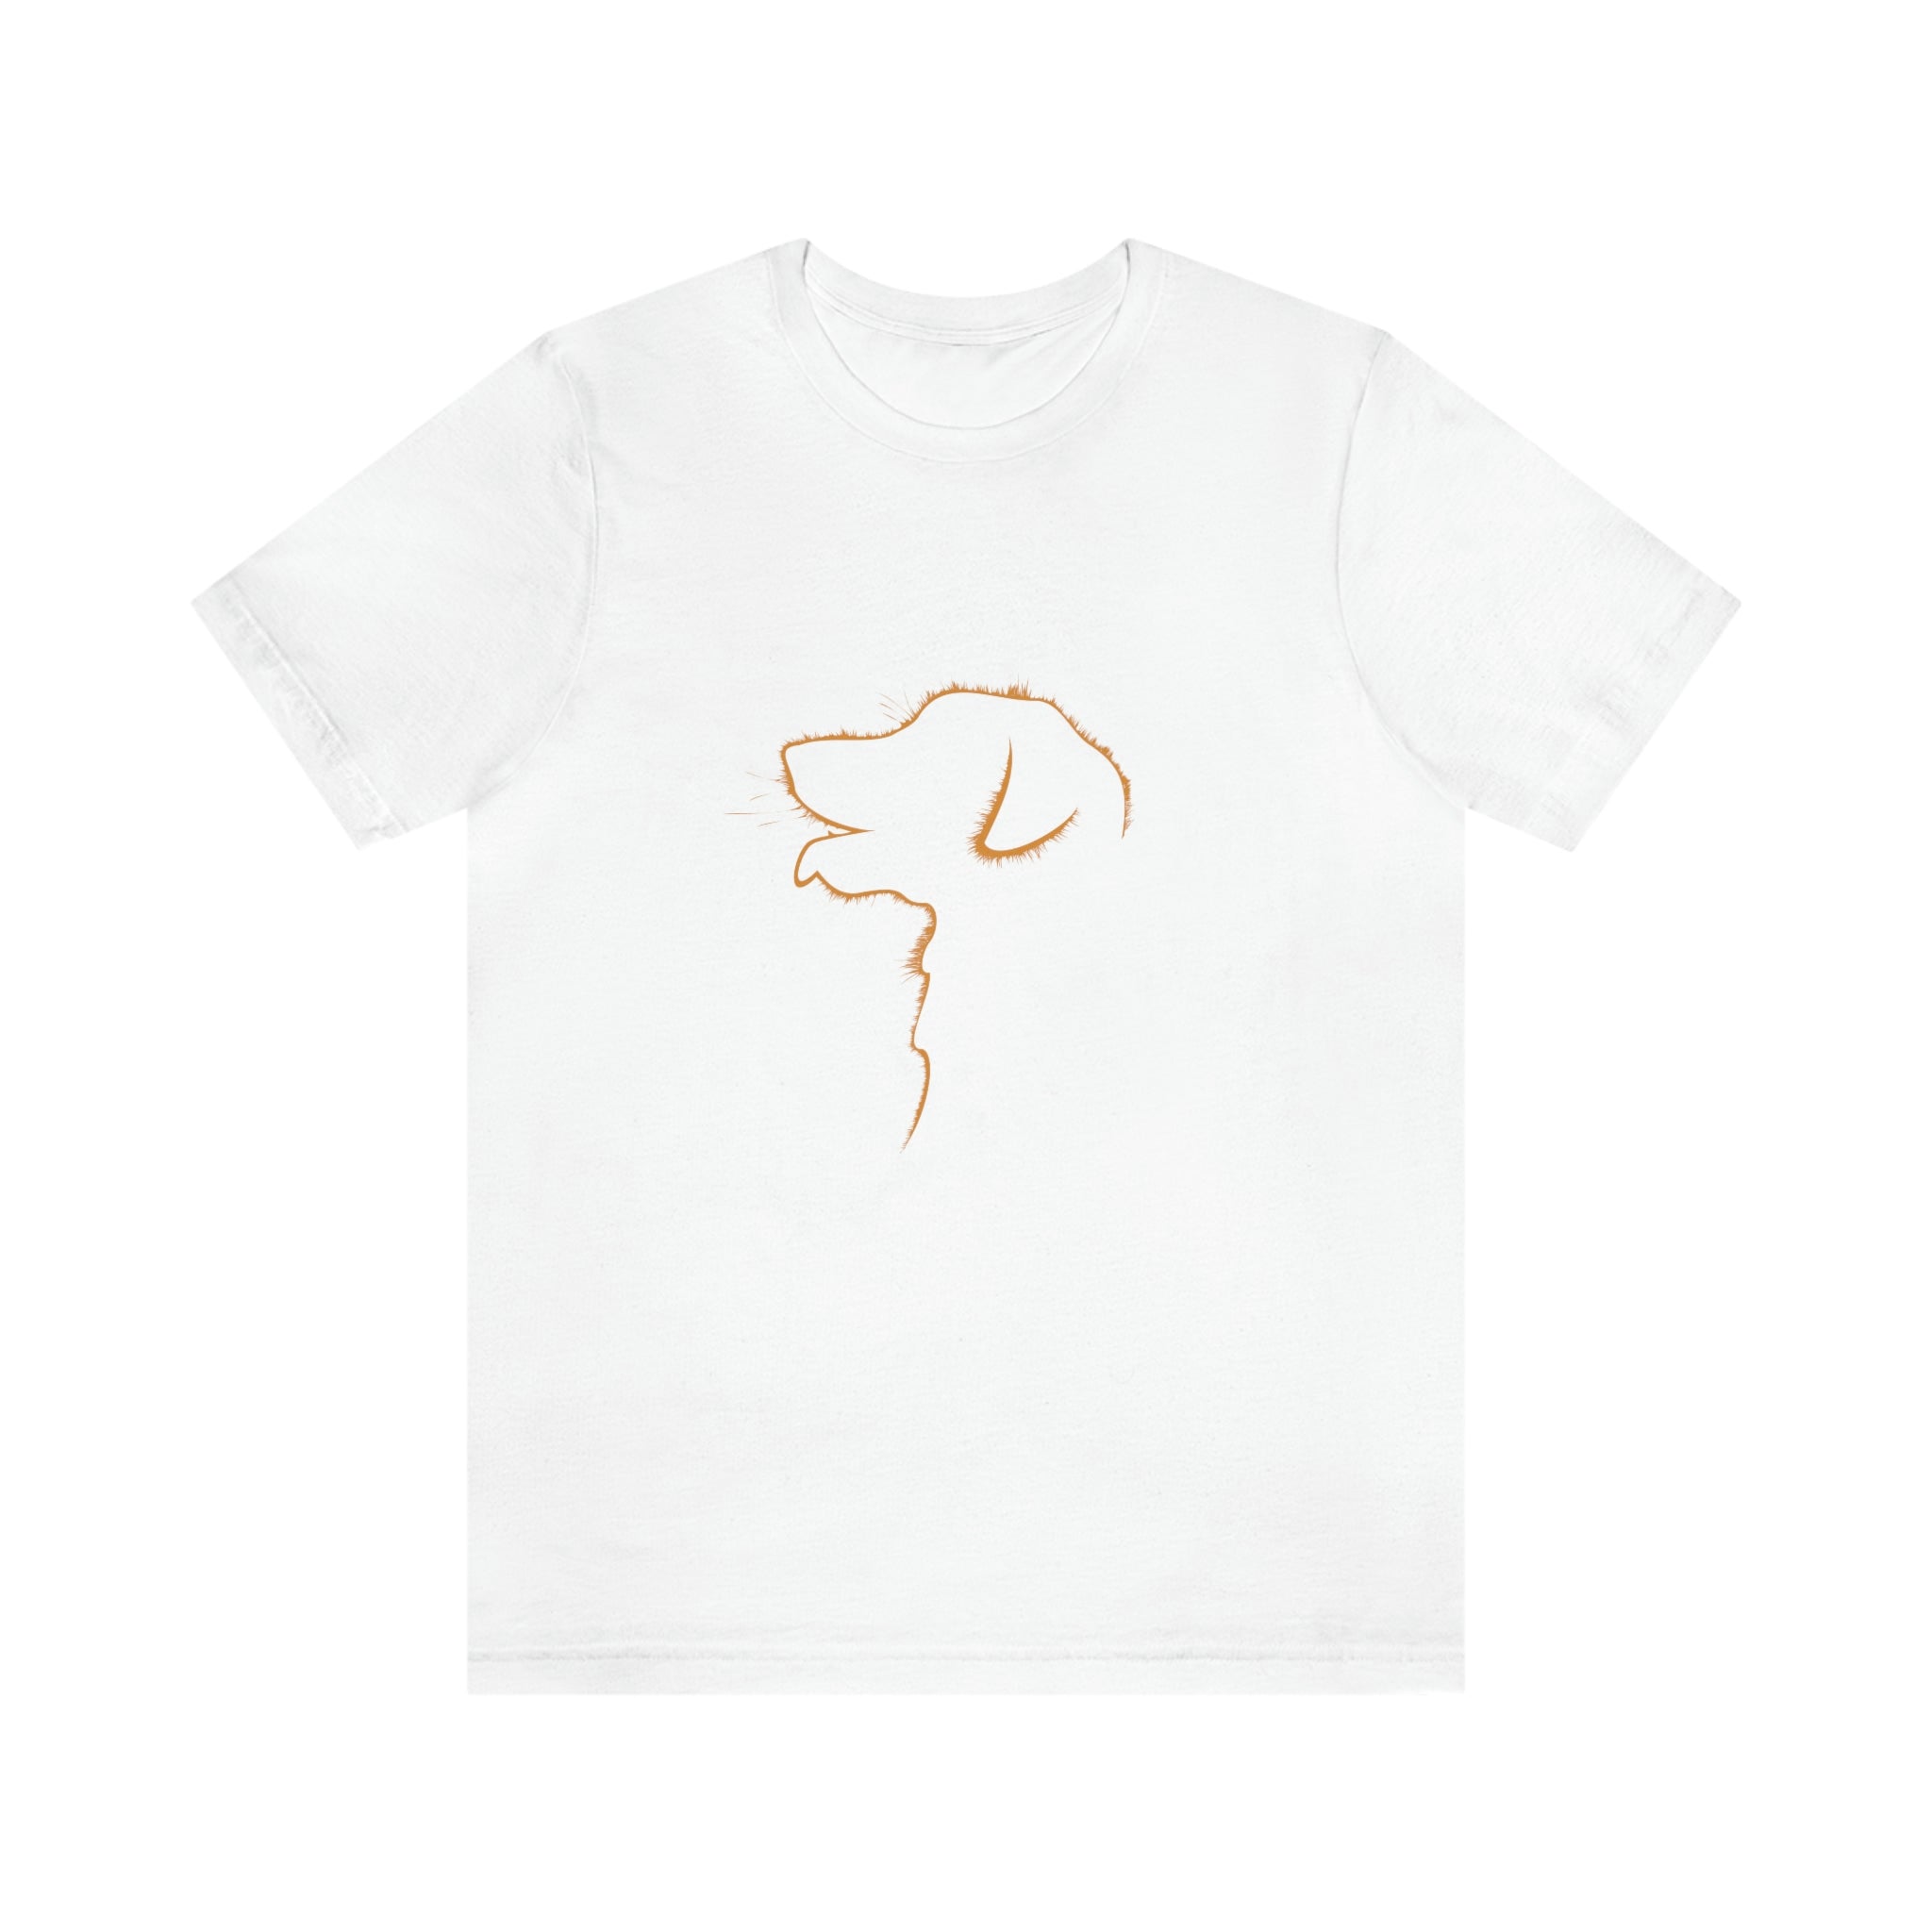 Dog Silhouette - Orange : Unisex 100% Cotton T-Shirt by Bella+Canvas